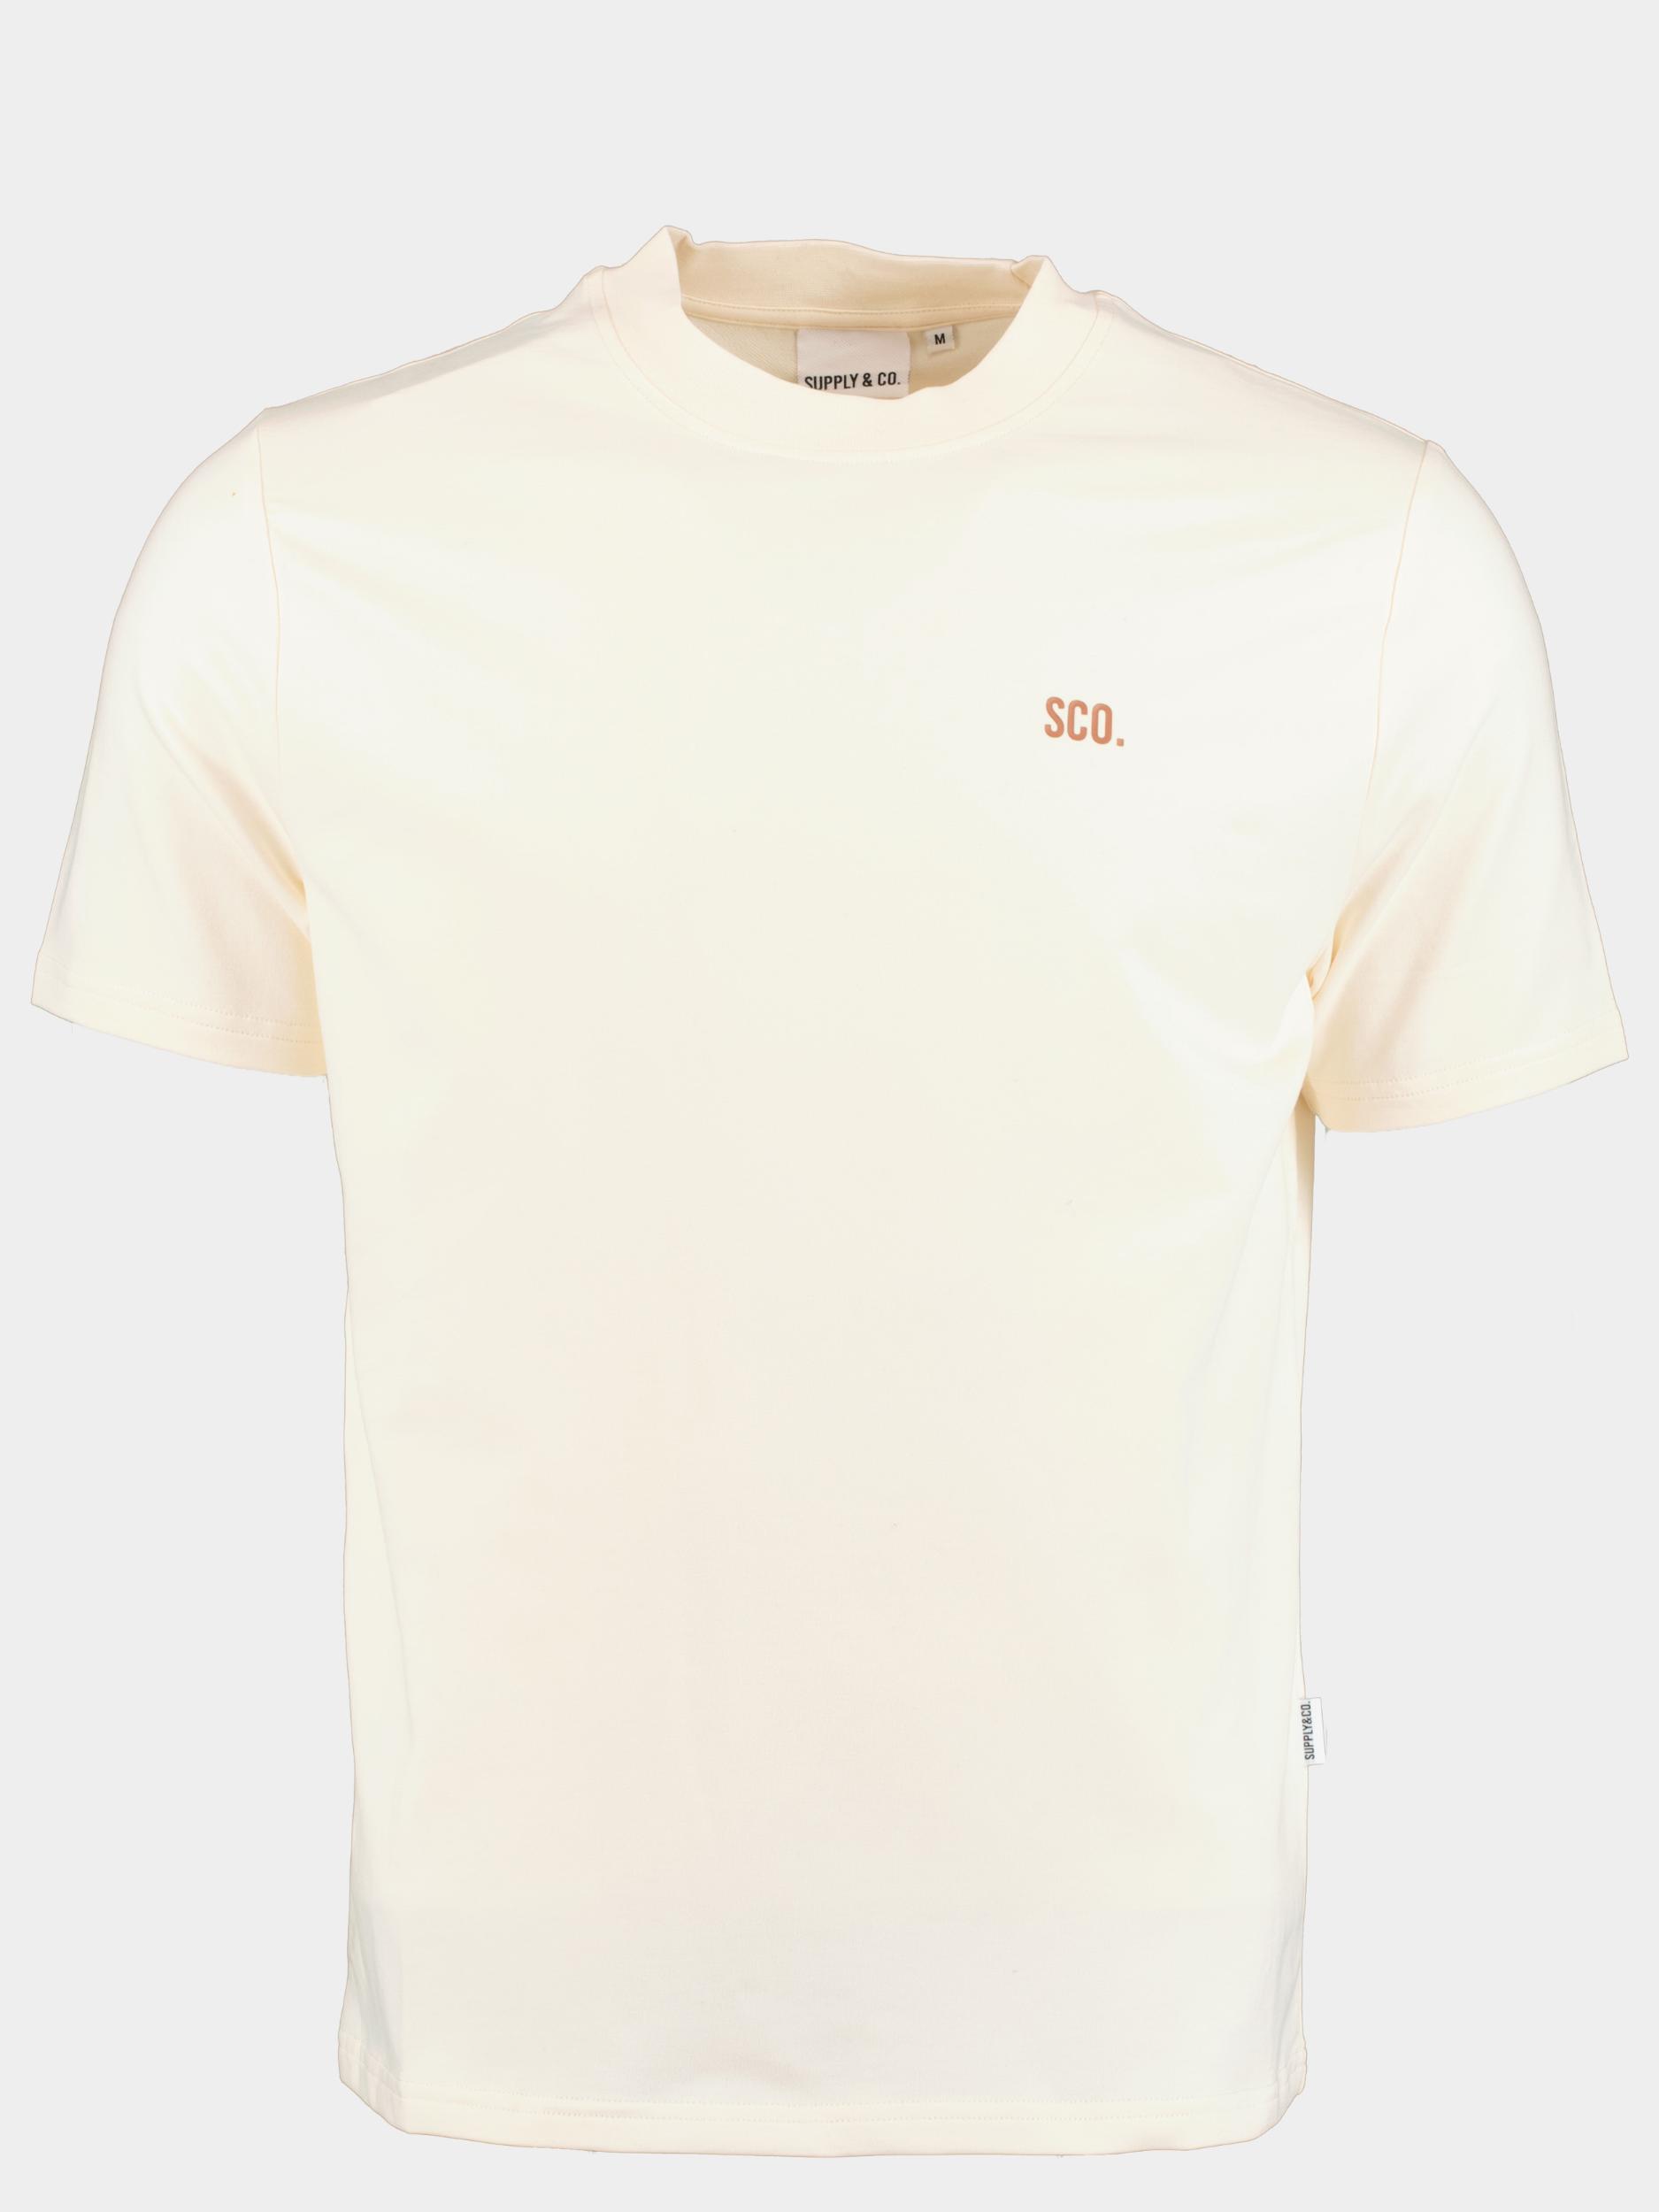 Supply & Co. T-shirt korte mouw Beige Basic Tee With Chestlogo 23308BA50/150 off-white